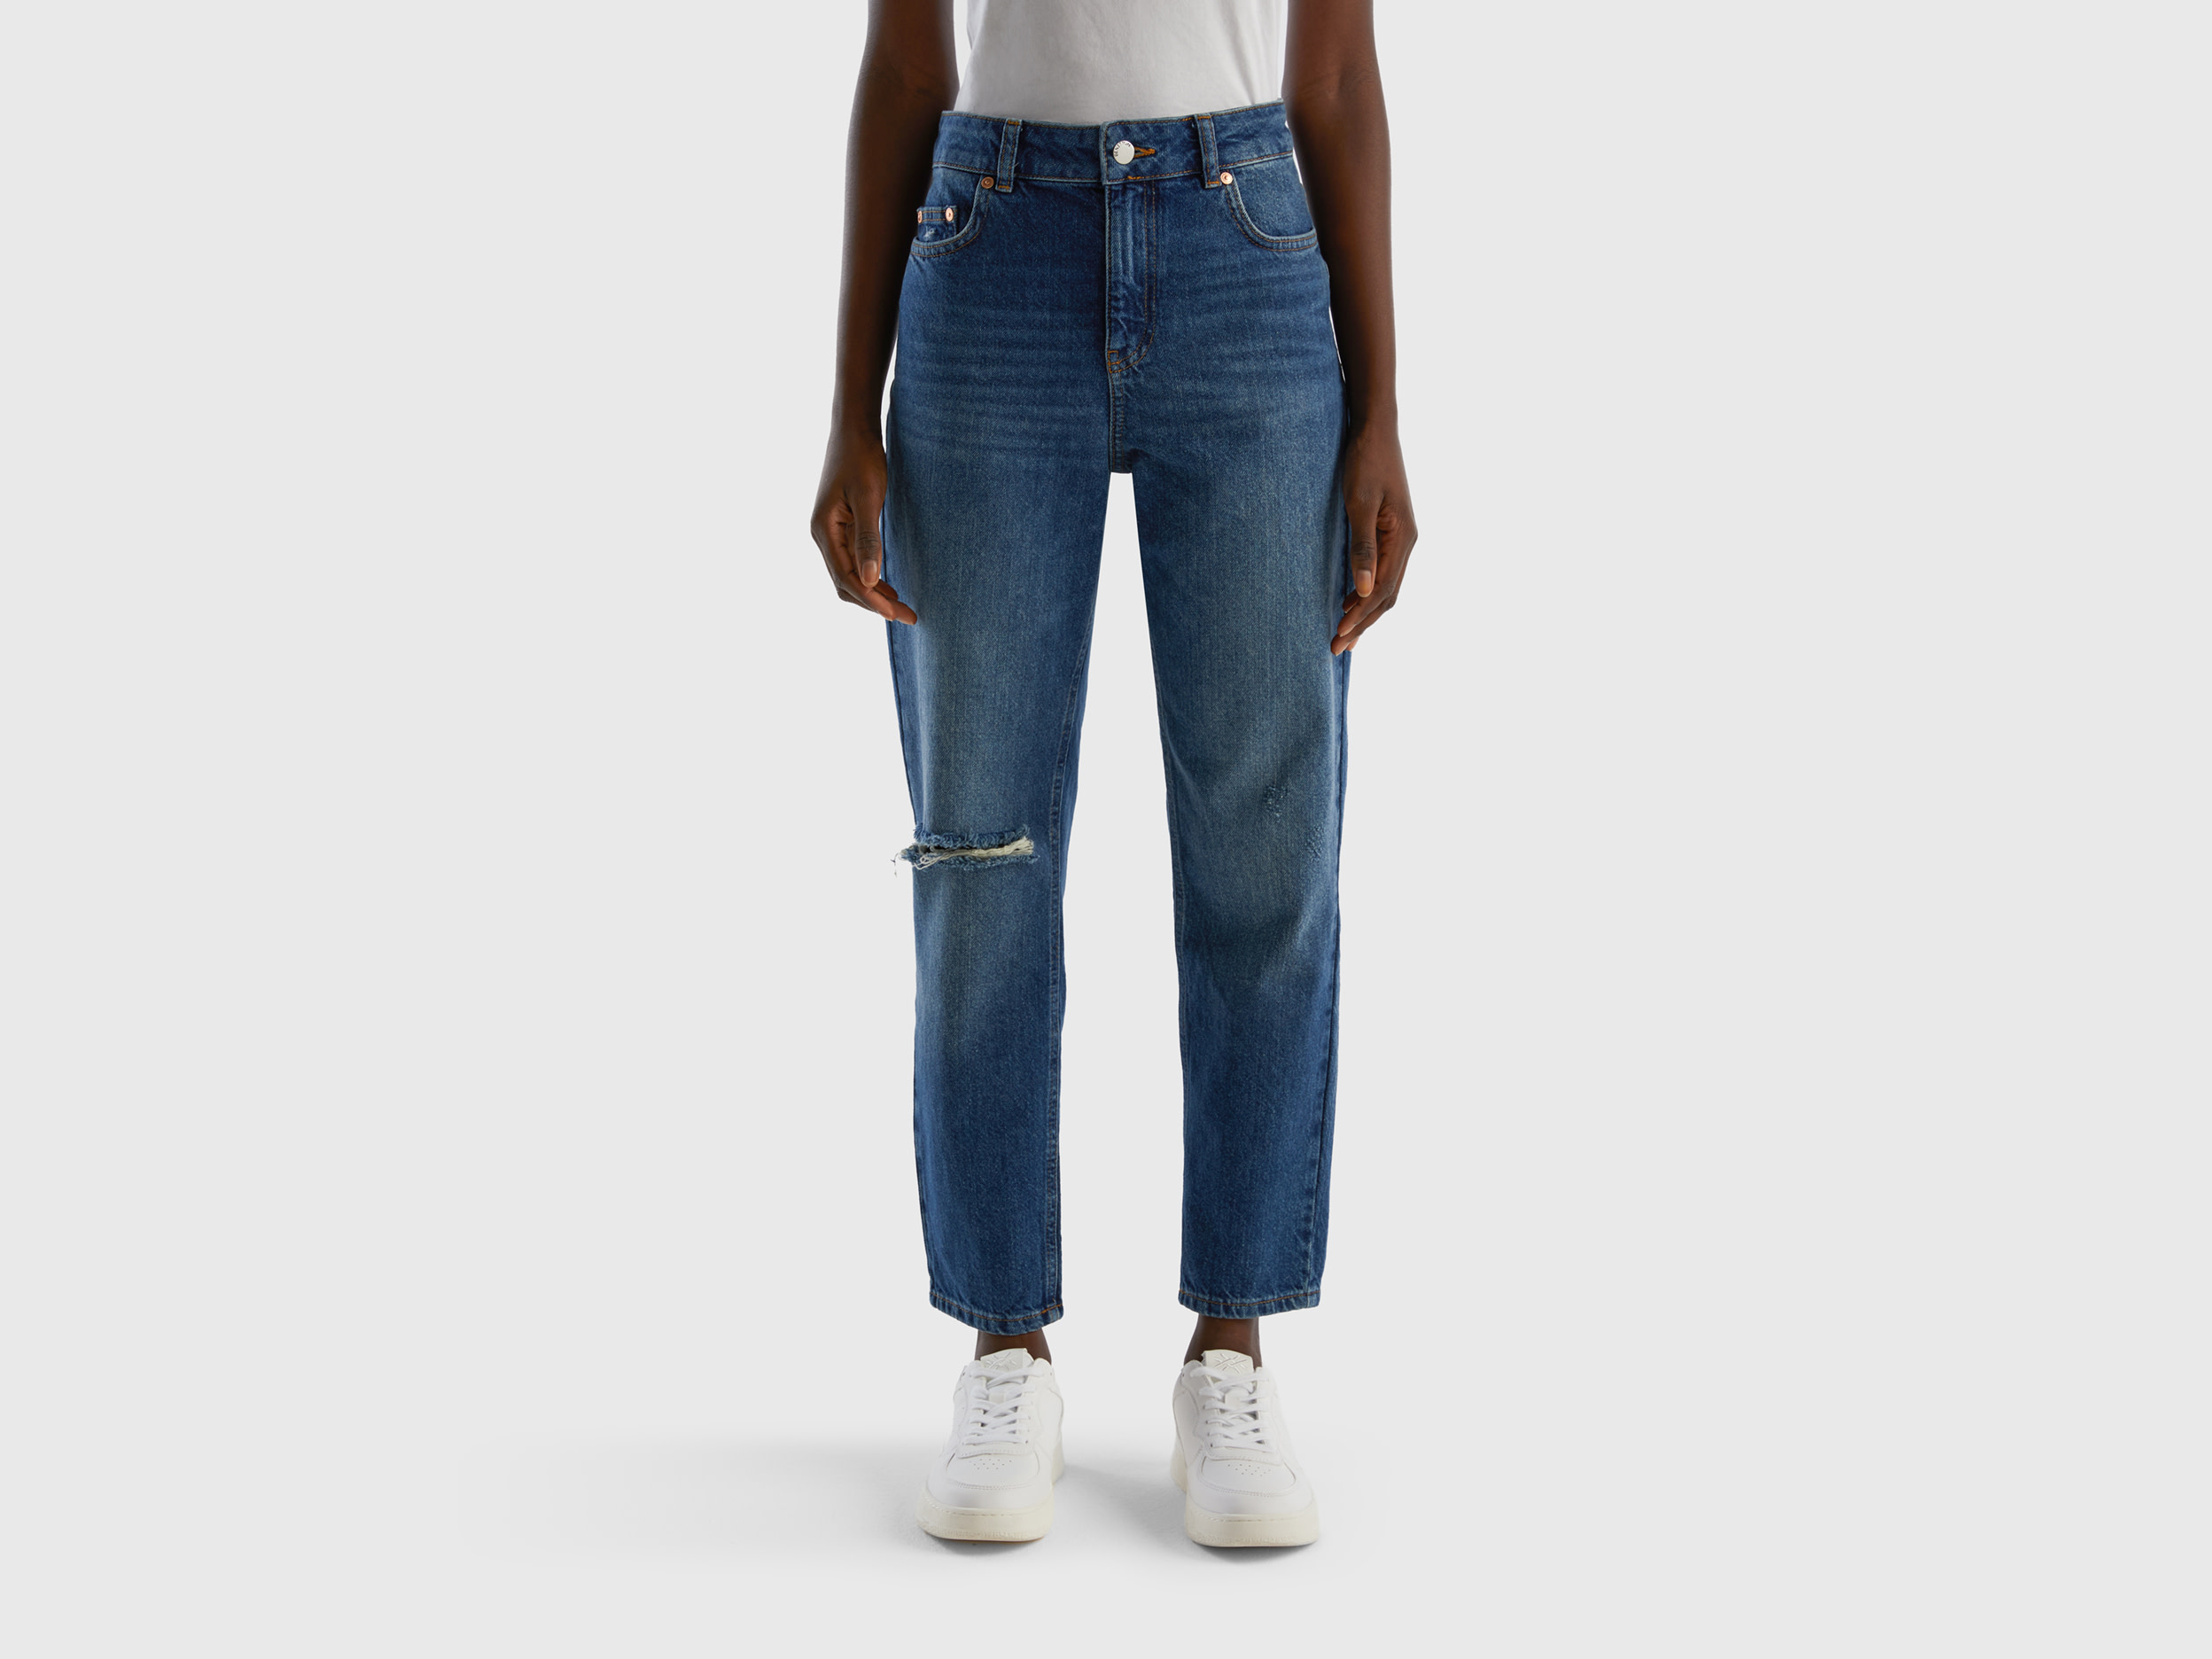 Benetton, Cropped High-waisted Jeans, size 26, Dark Blue, Women